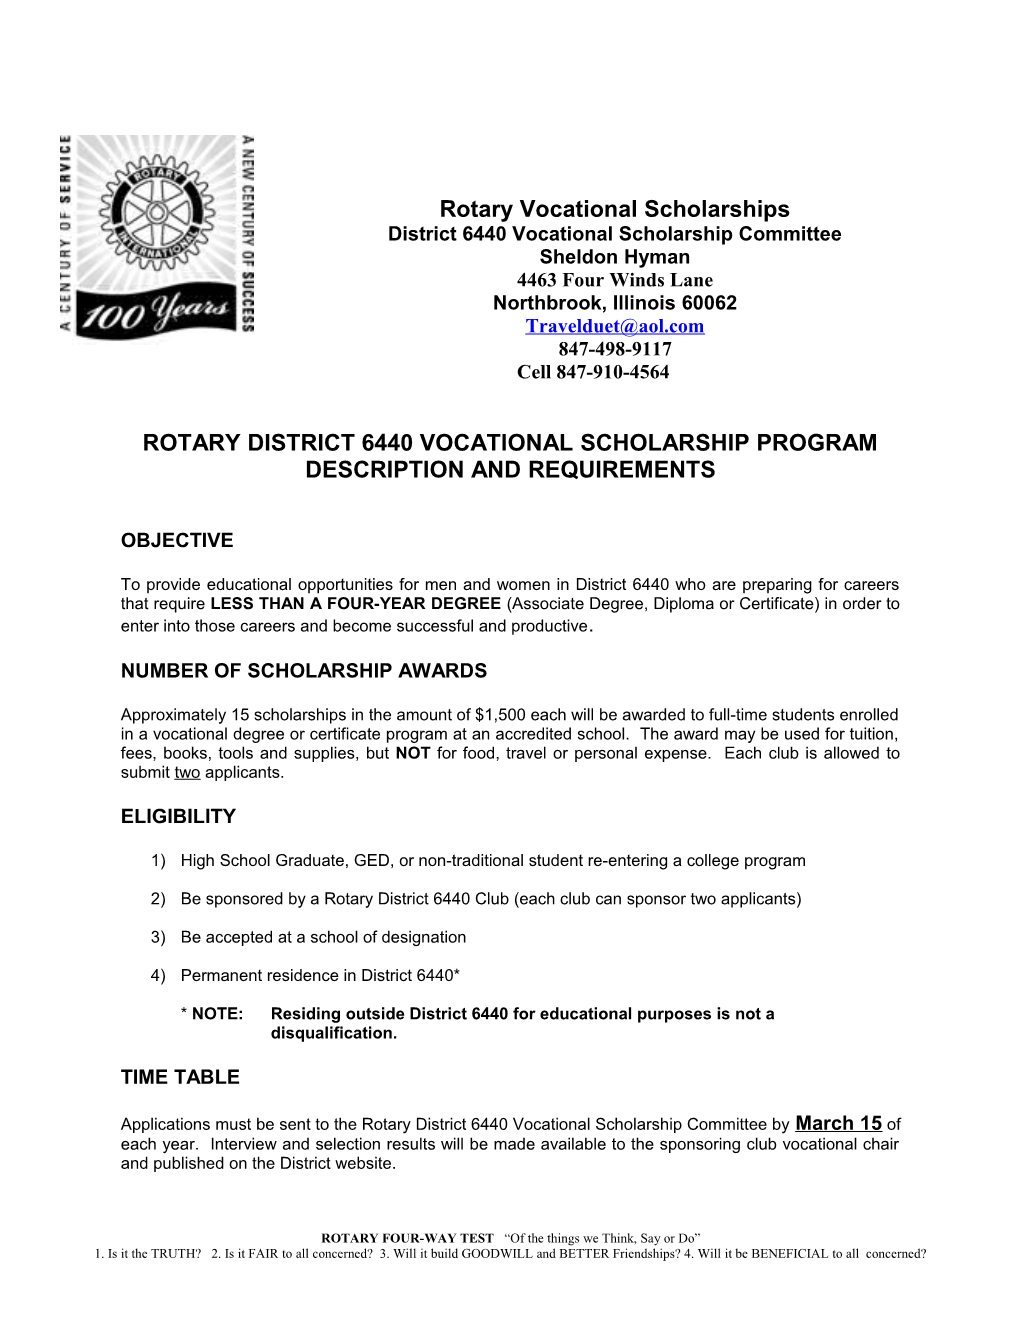 2004-2005 Rotary Vocational Scholarships